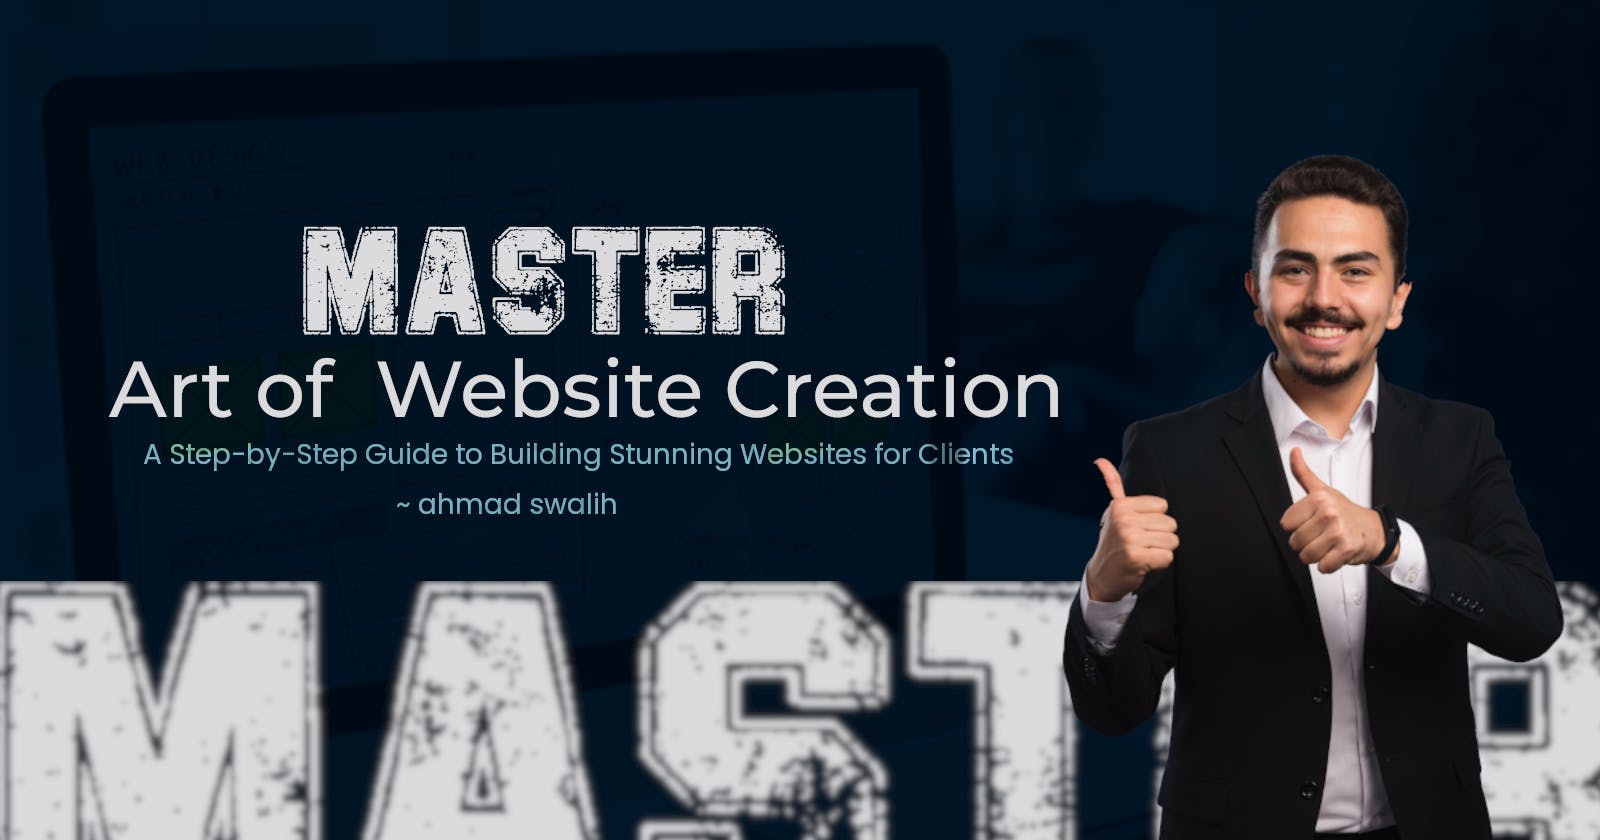 Master the Art of Website Creation